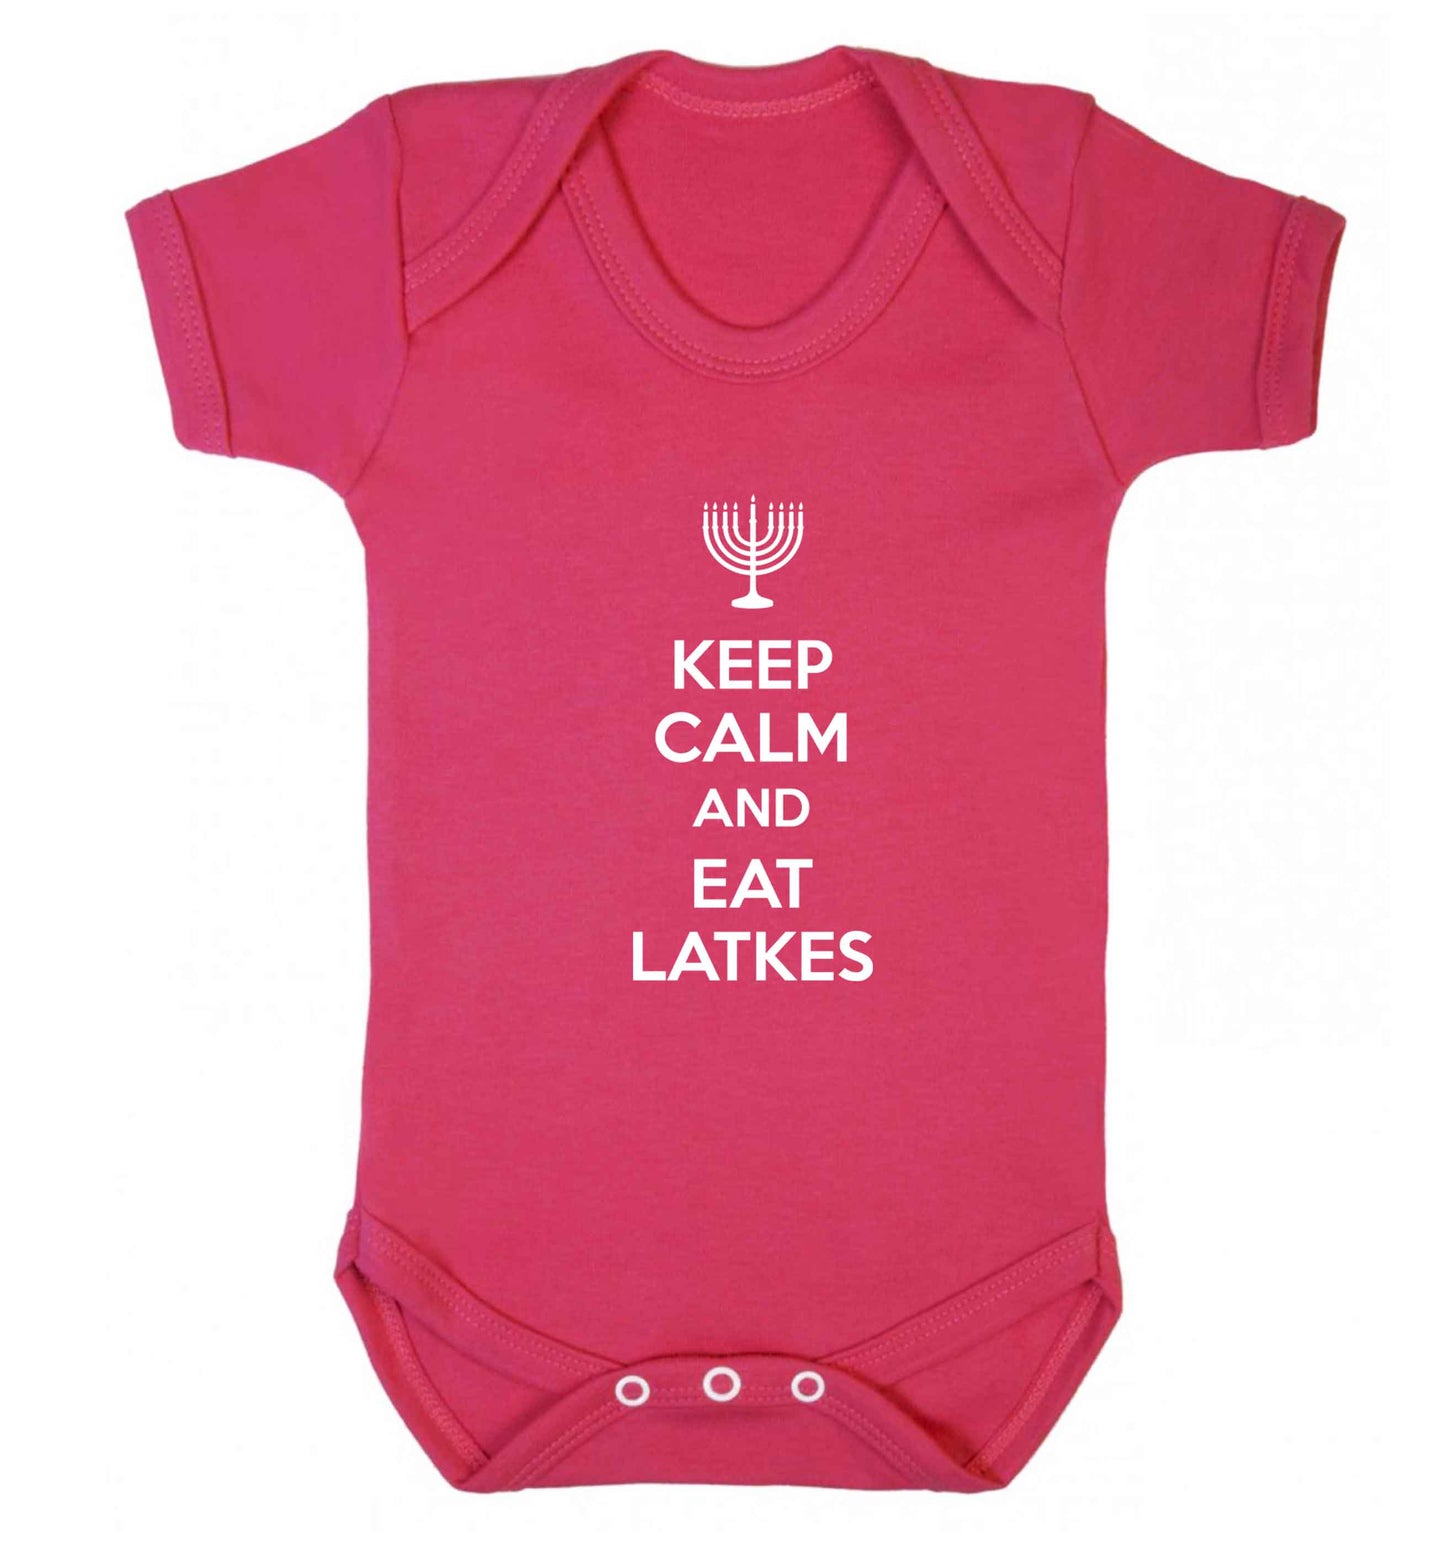 Keep calm and eat latkes baby vest dark pink 18-24 months